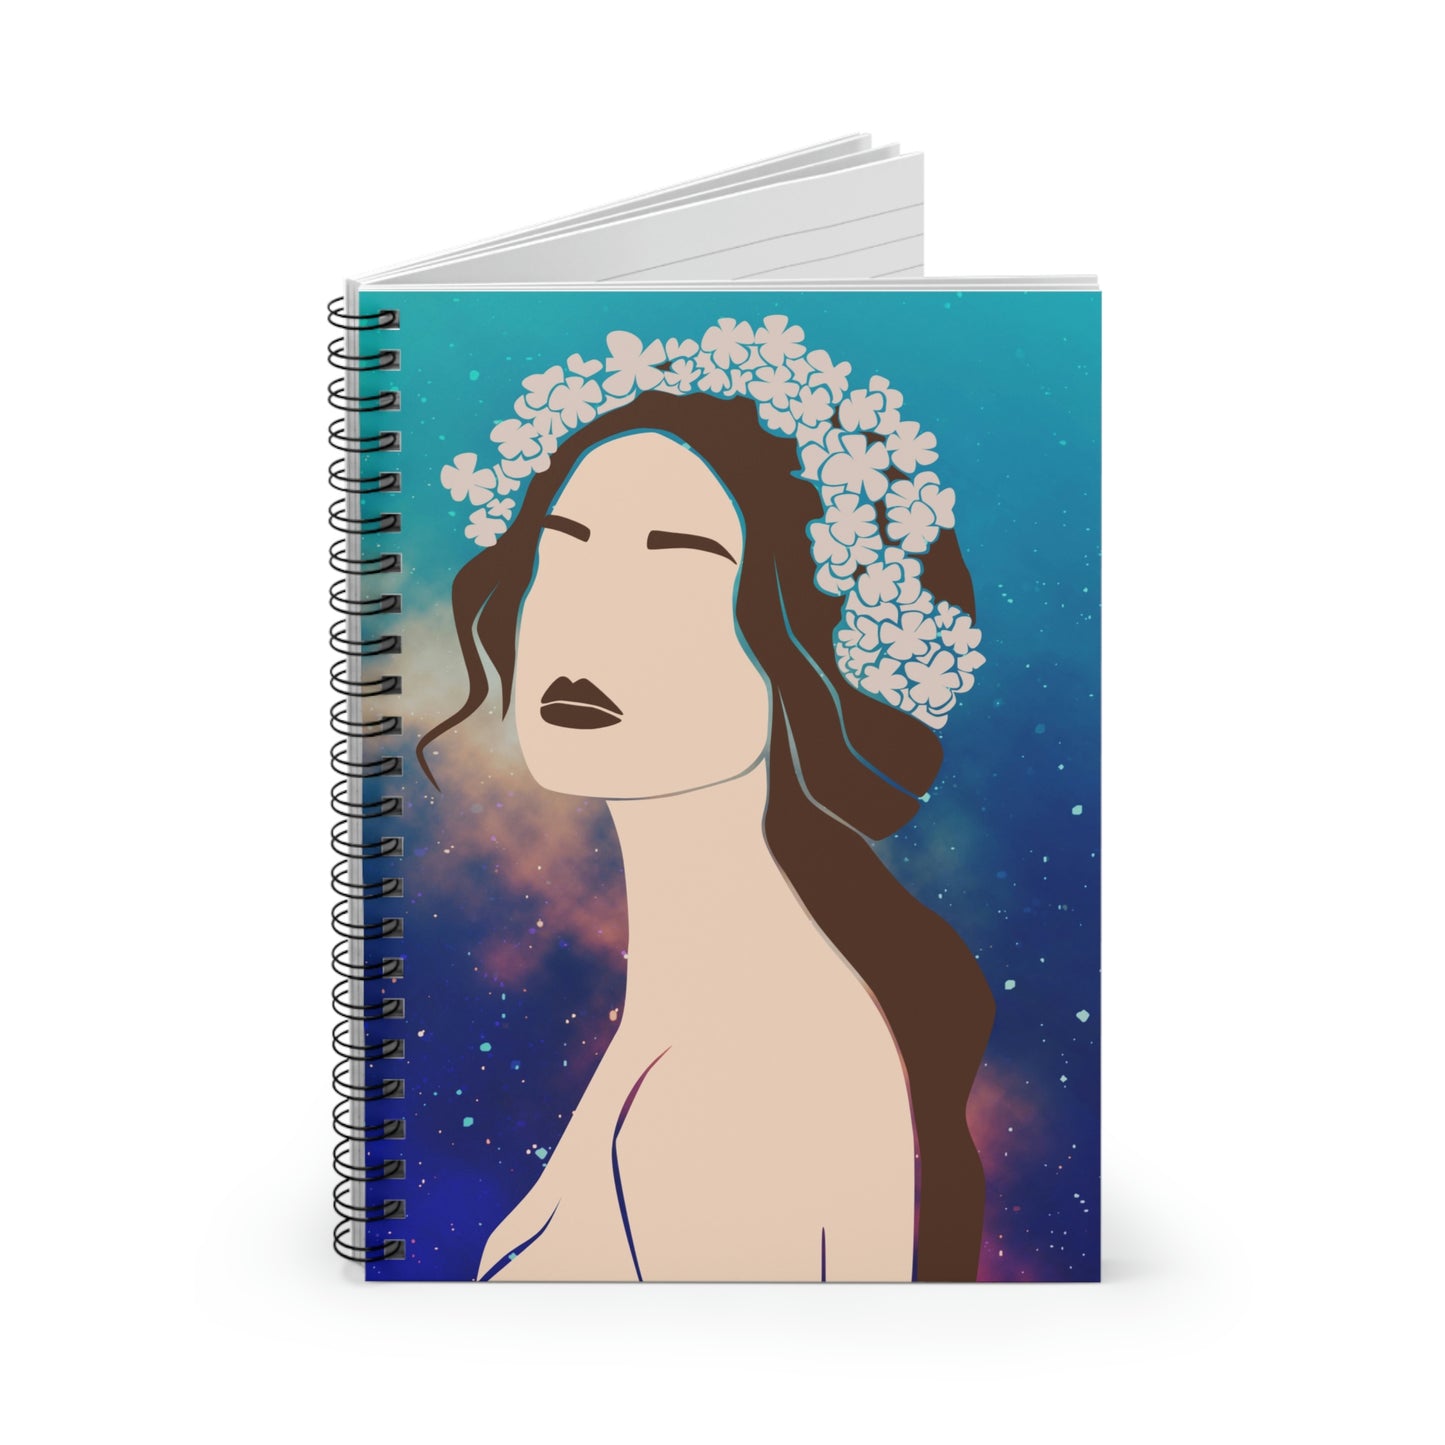 Goddess in the Stars 2 Spiral Notebook/Journal